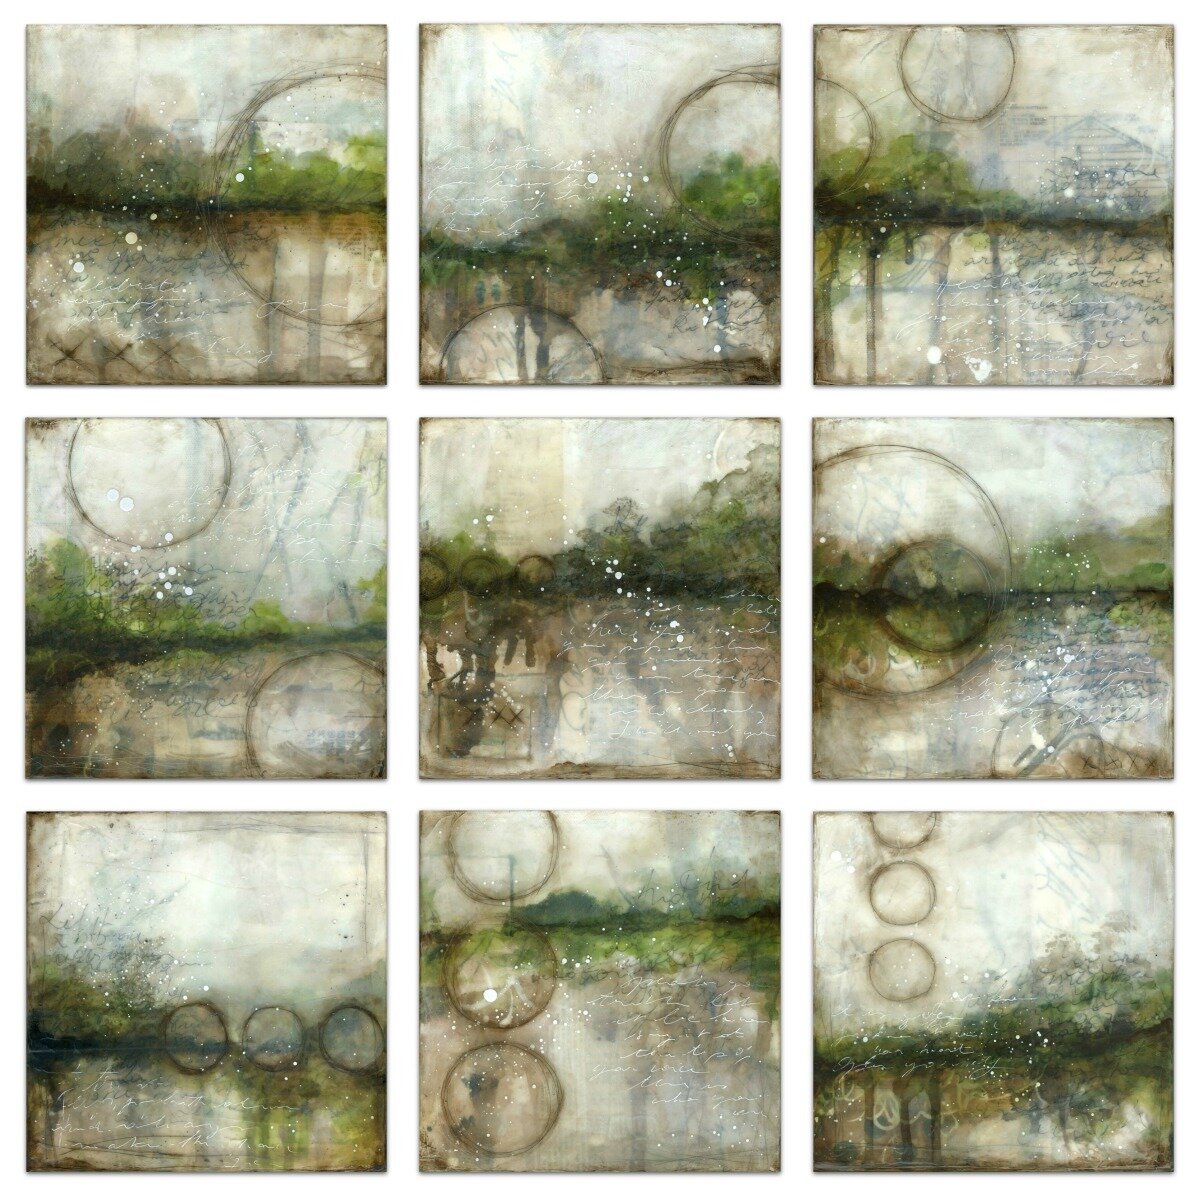 Landscapes of intention collage 9.jpg